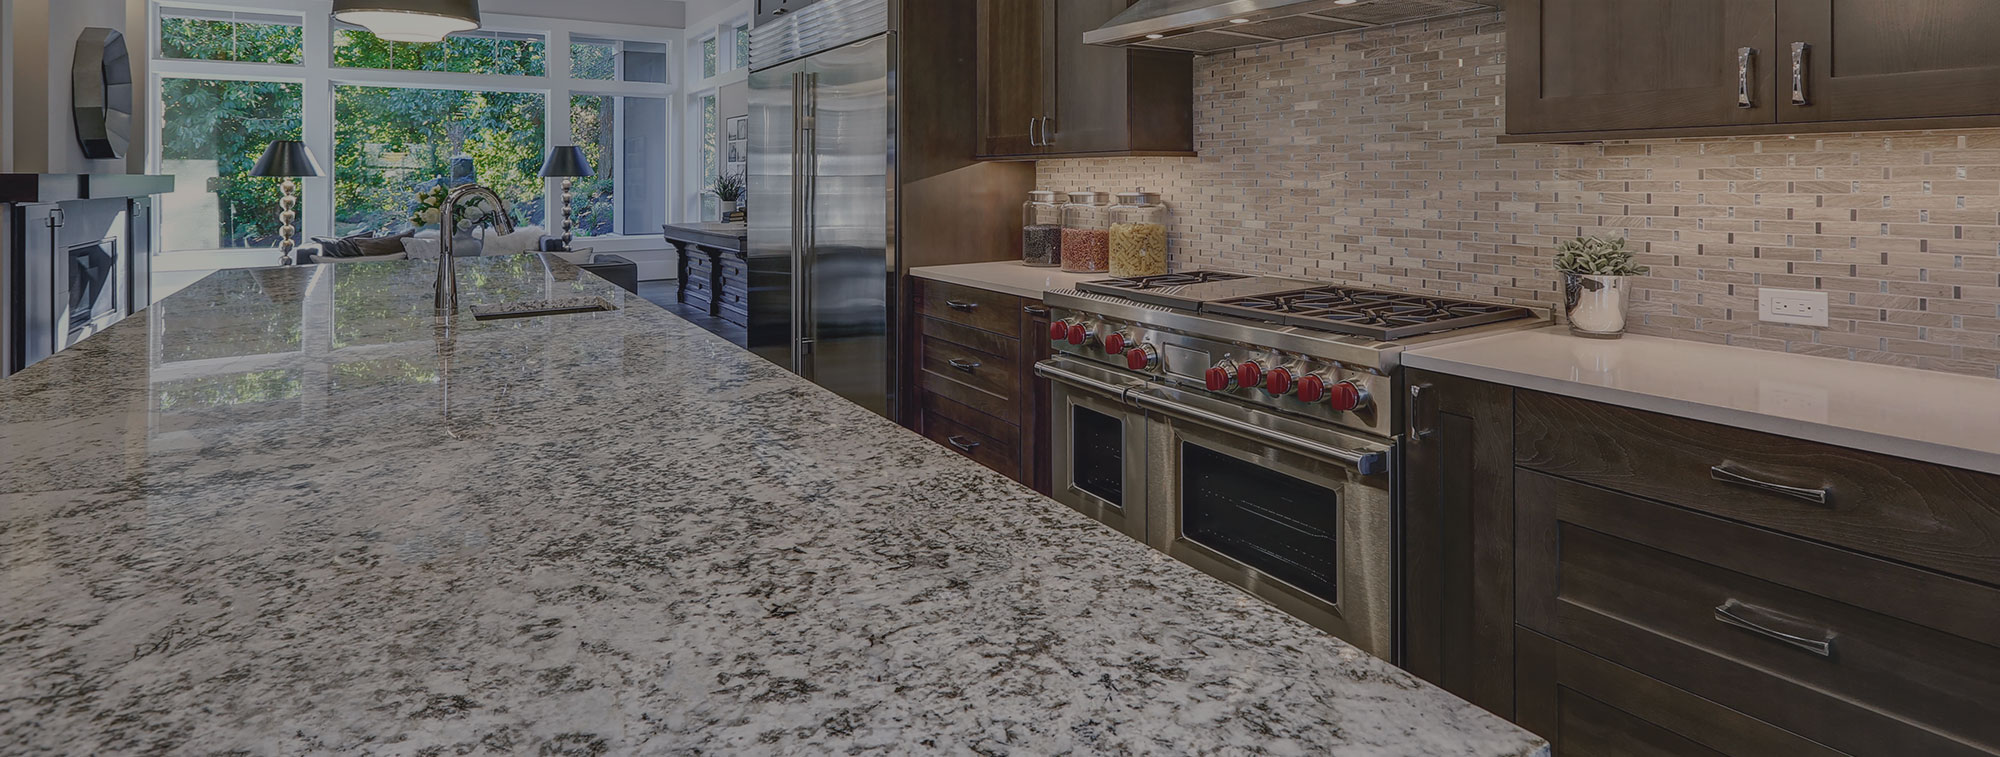 Kitchen With Granite Countertop